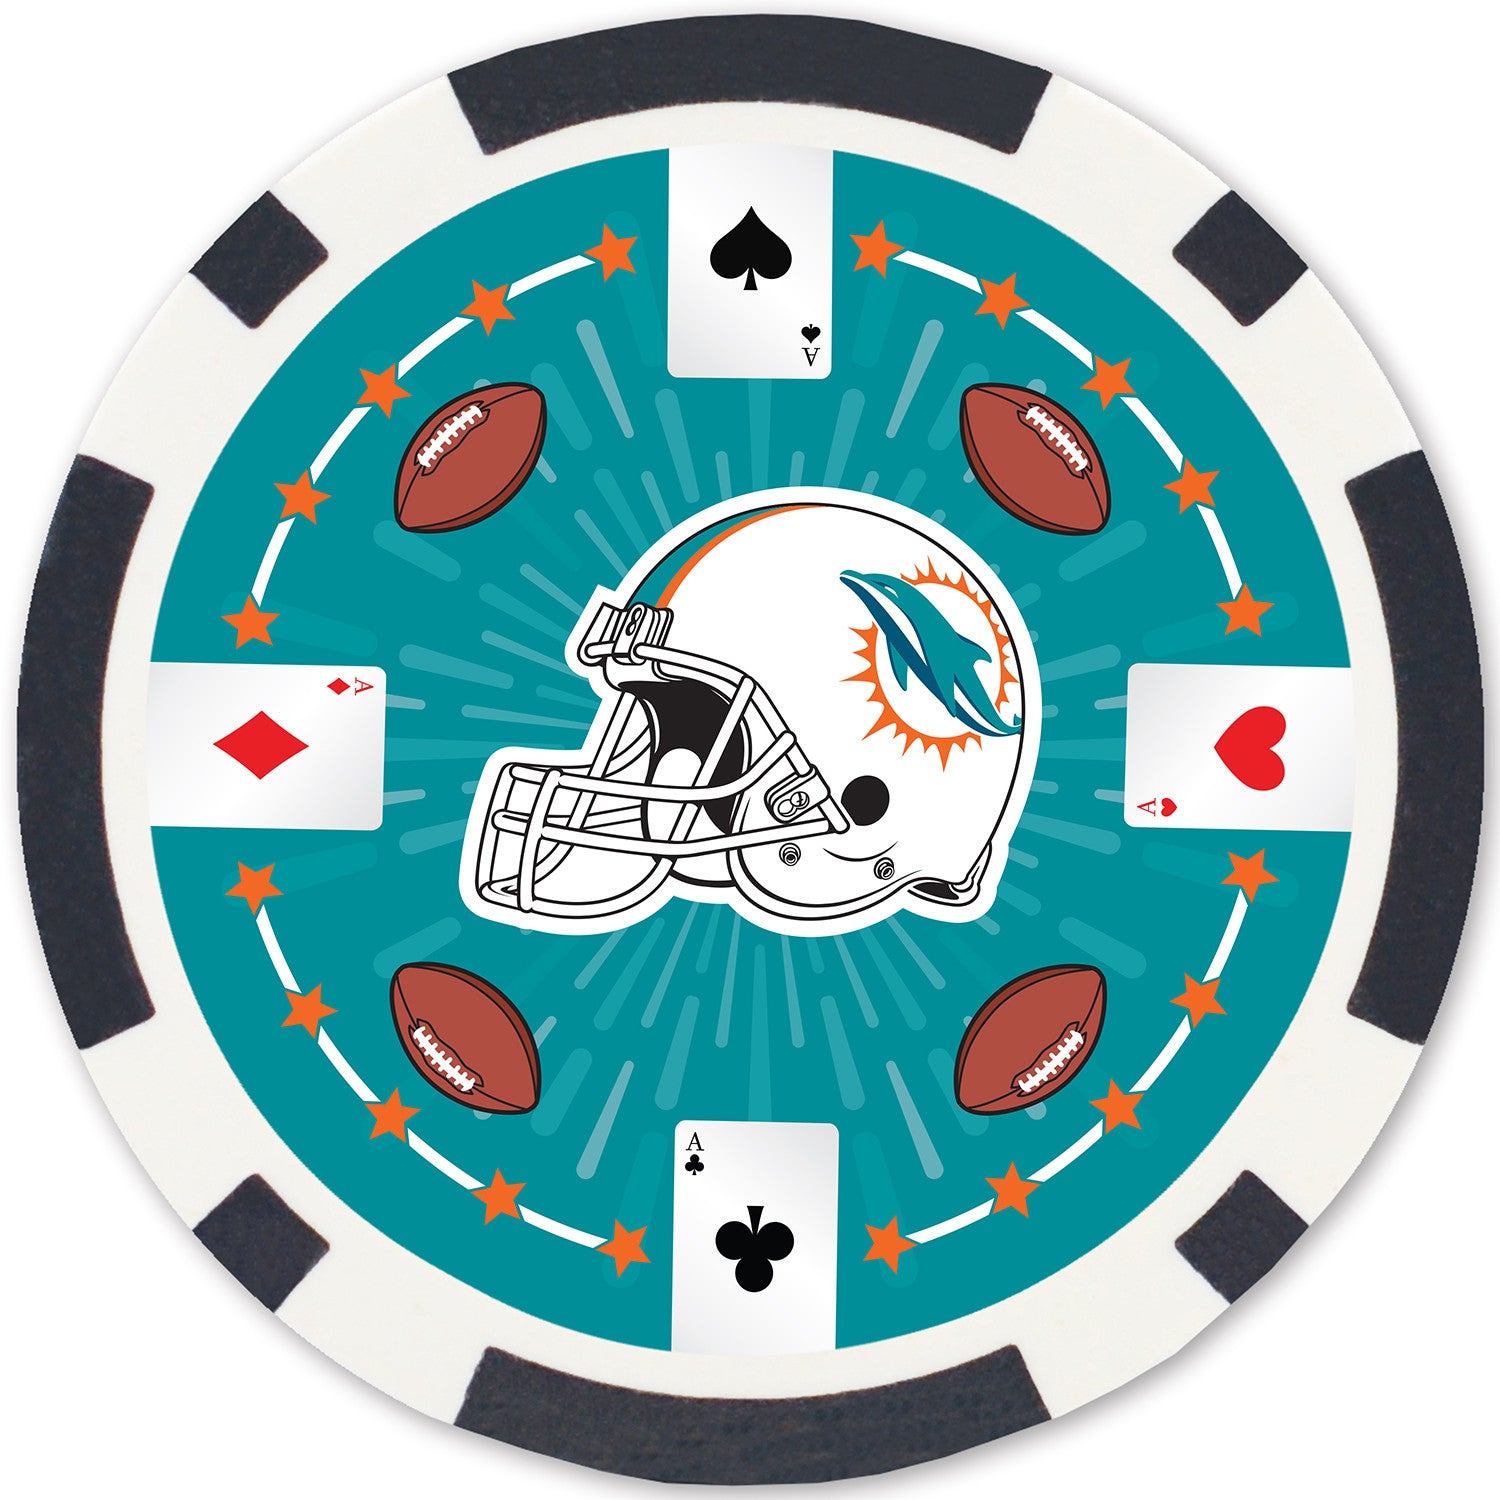 Miami Dolphins Casino Style 100 Piece Poker Set